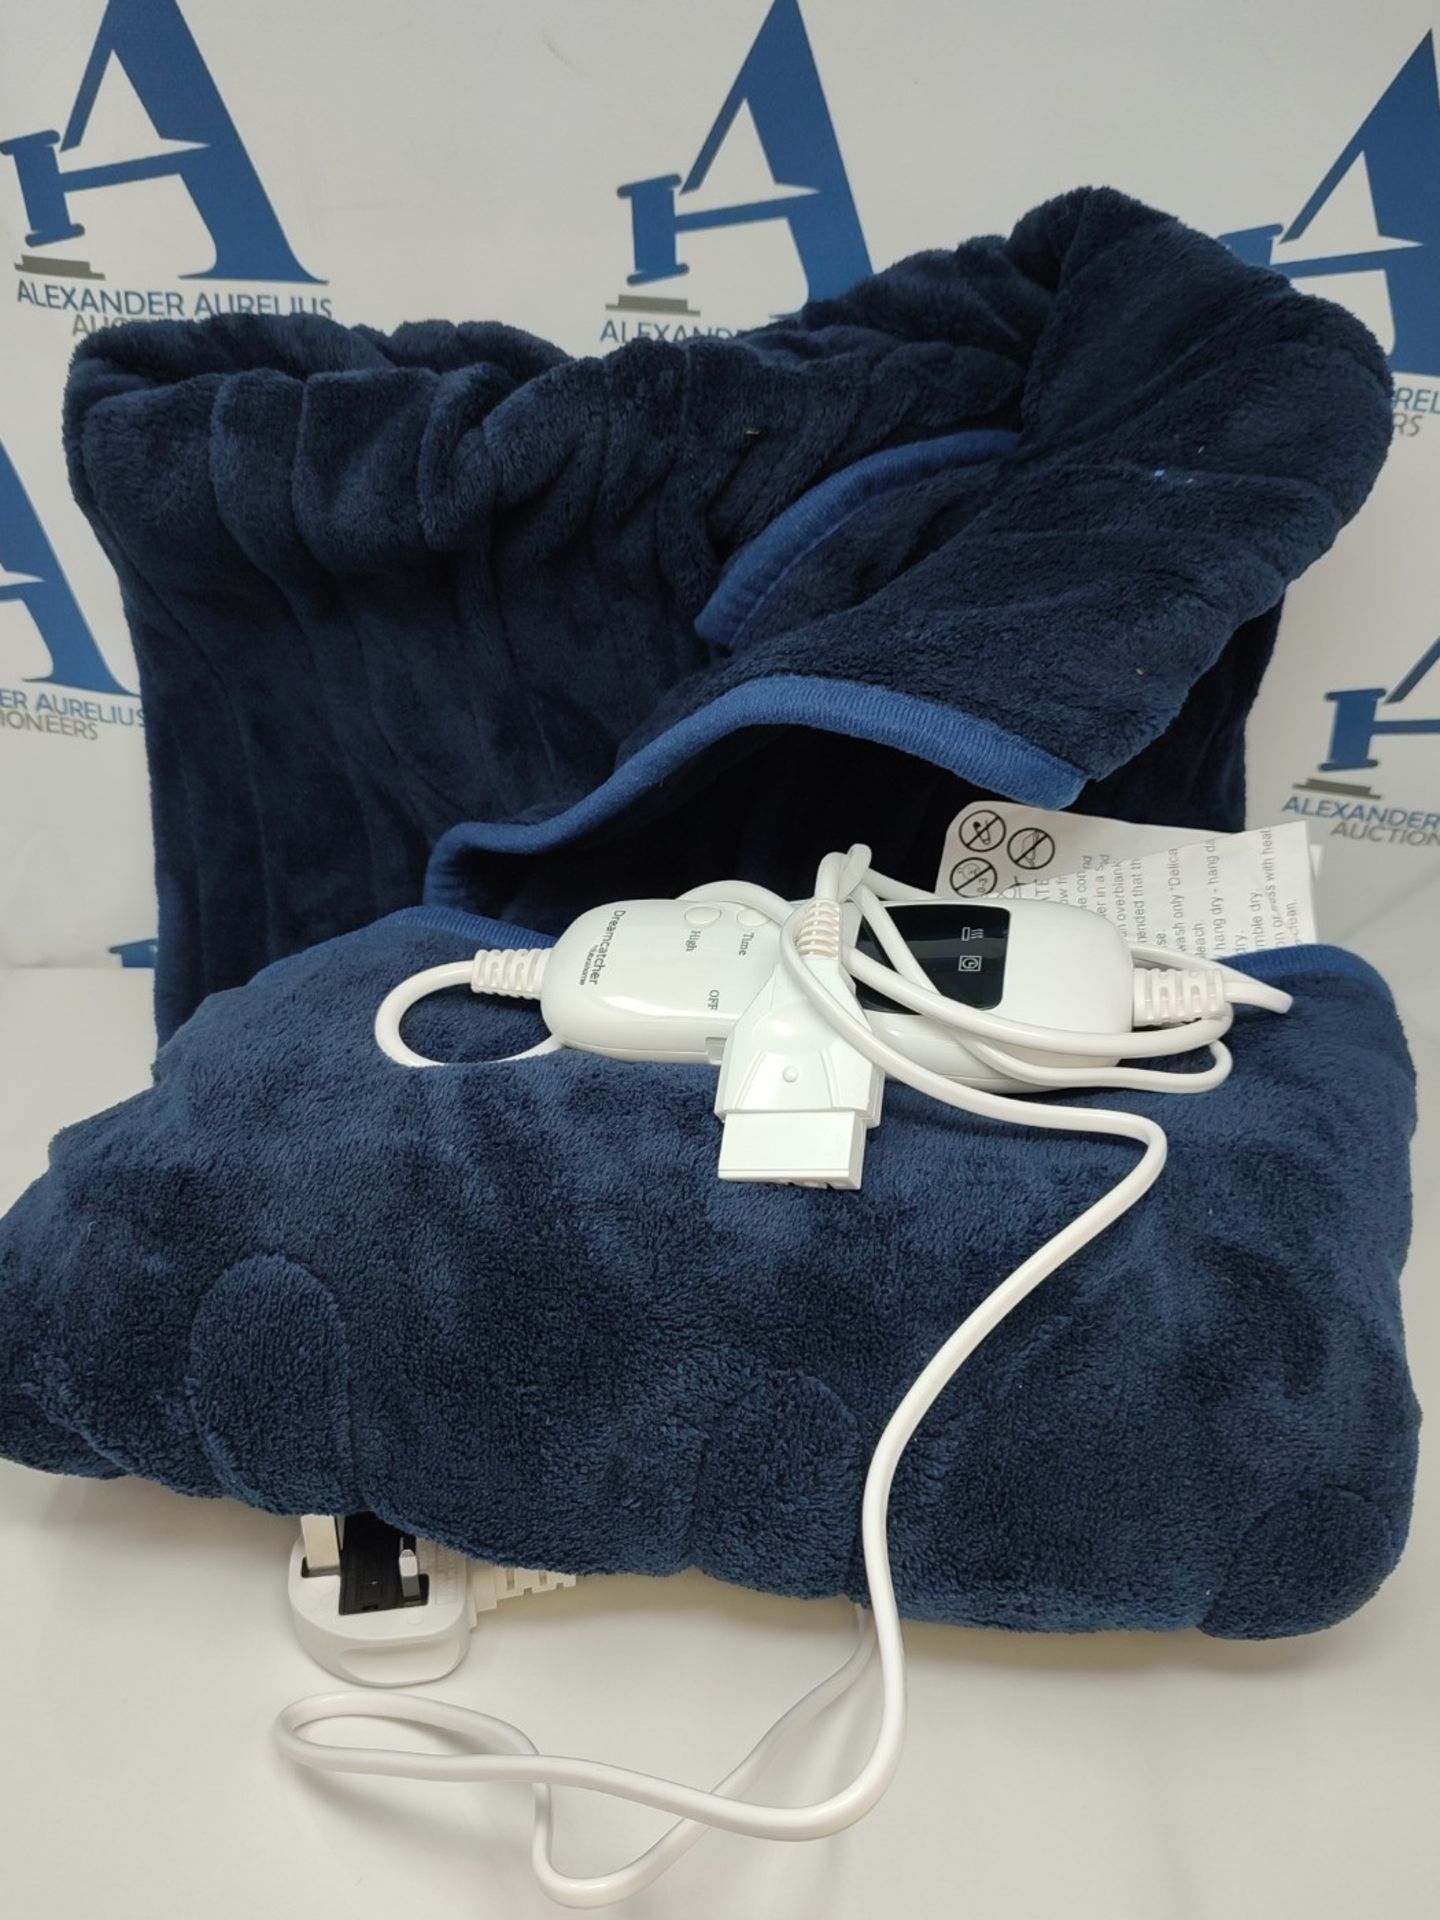 Dreamcatcher Electric Heated Throw Blanket 160 x 120cm, Machine Washable Soft Fleece O - Image 2 of 2